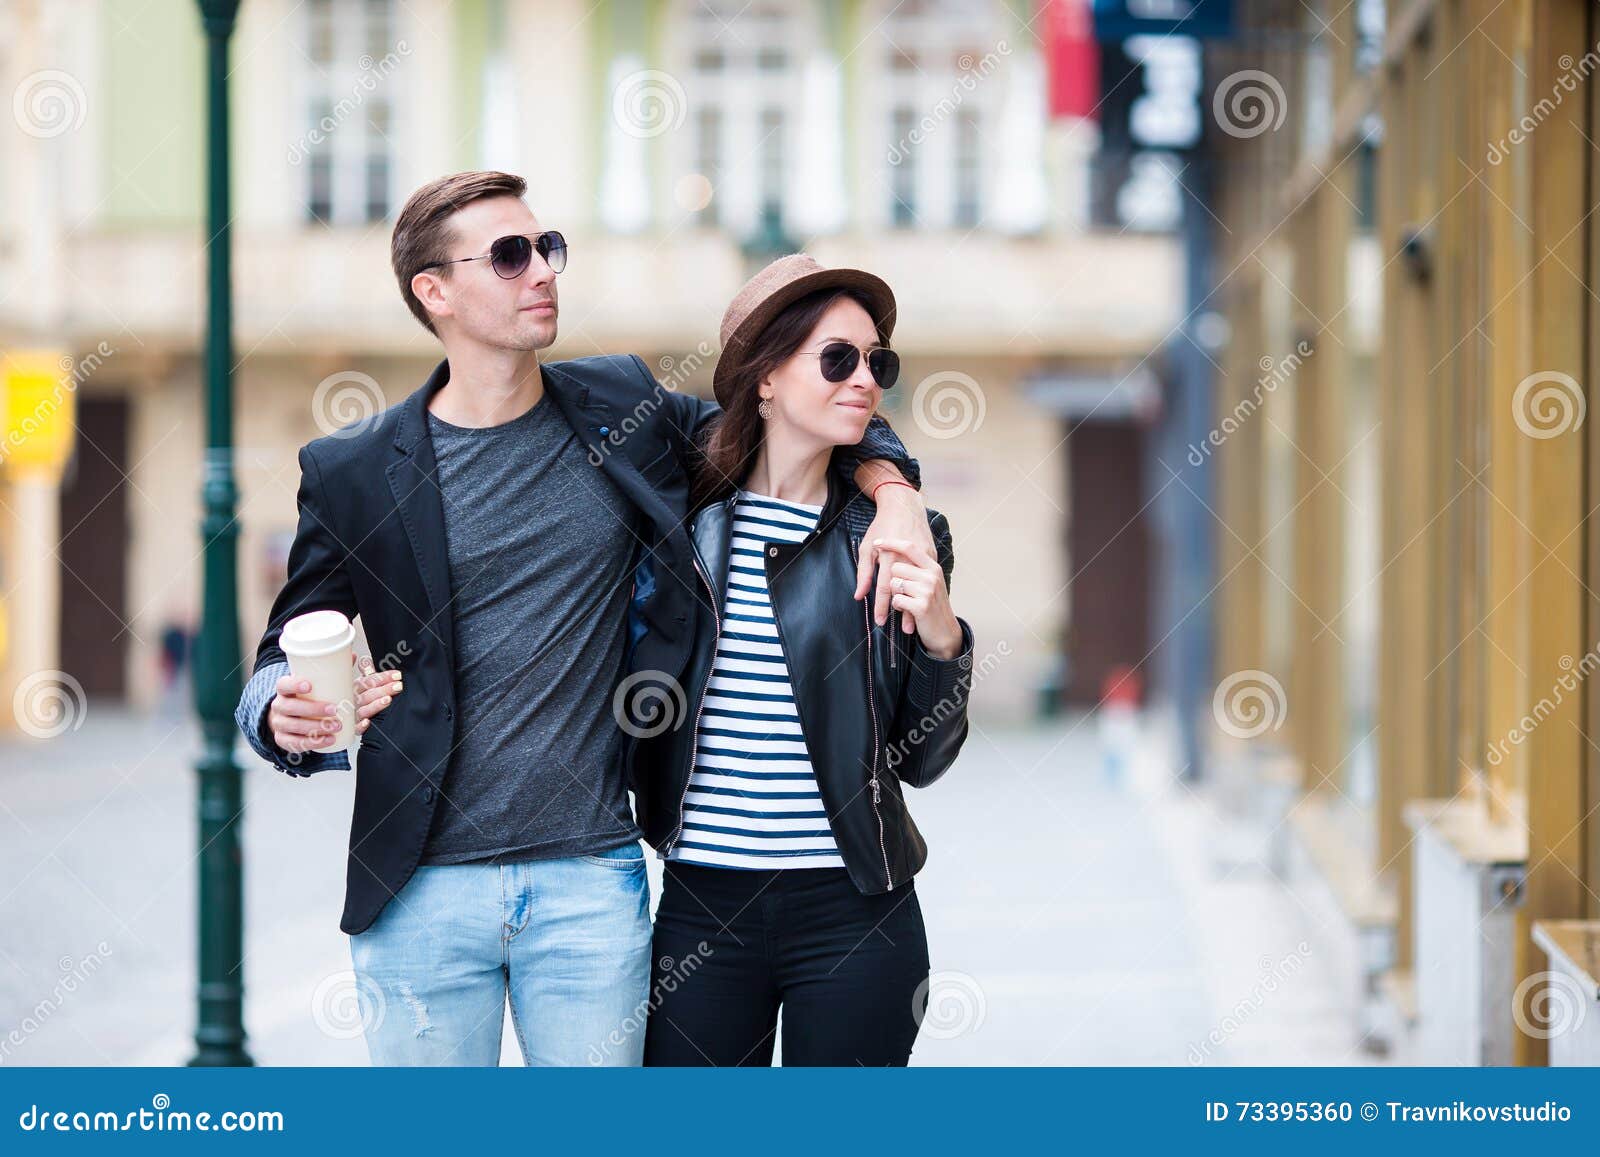 https://thumbs.dreamstime.com/z/romantic-couple-walking-together-europe-happy-lovers-enjoying-cityscape-famous-landmarks-stylish-urban-young-tourist-men-73395360.jpg